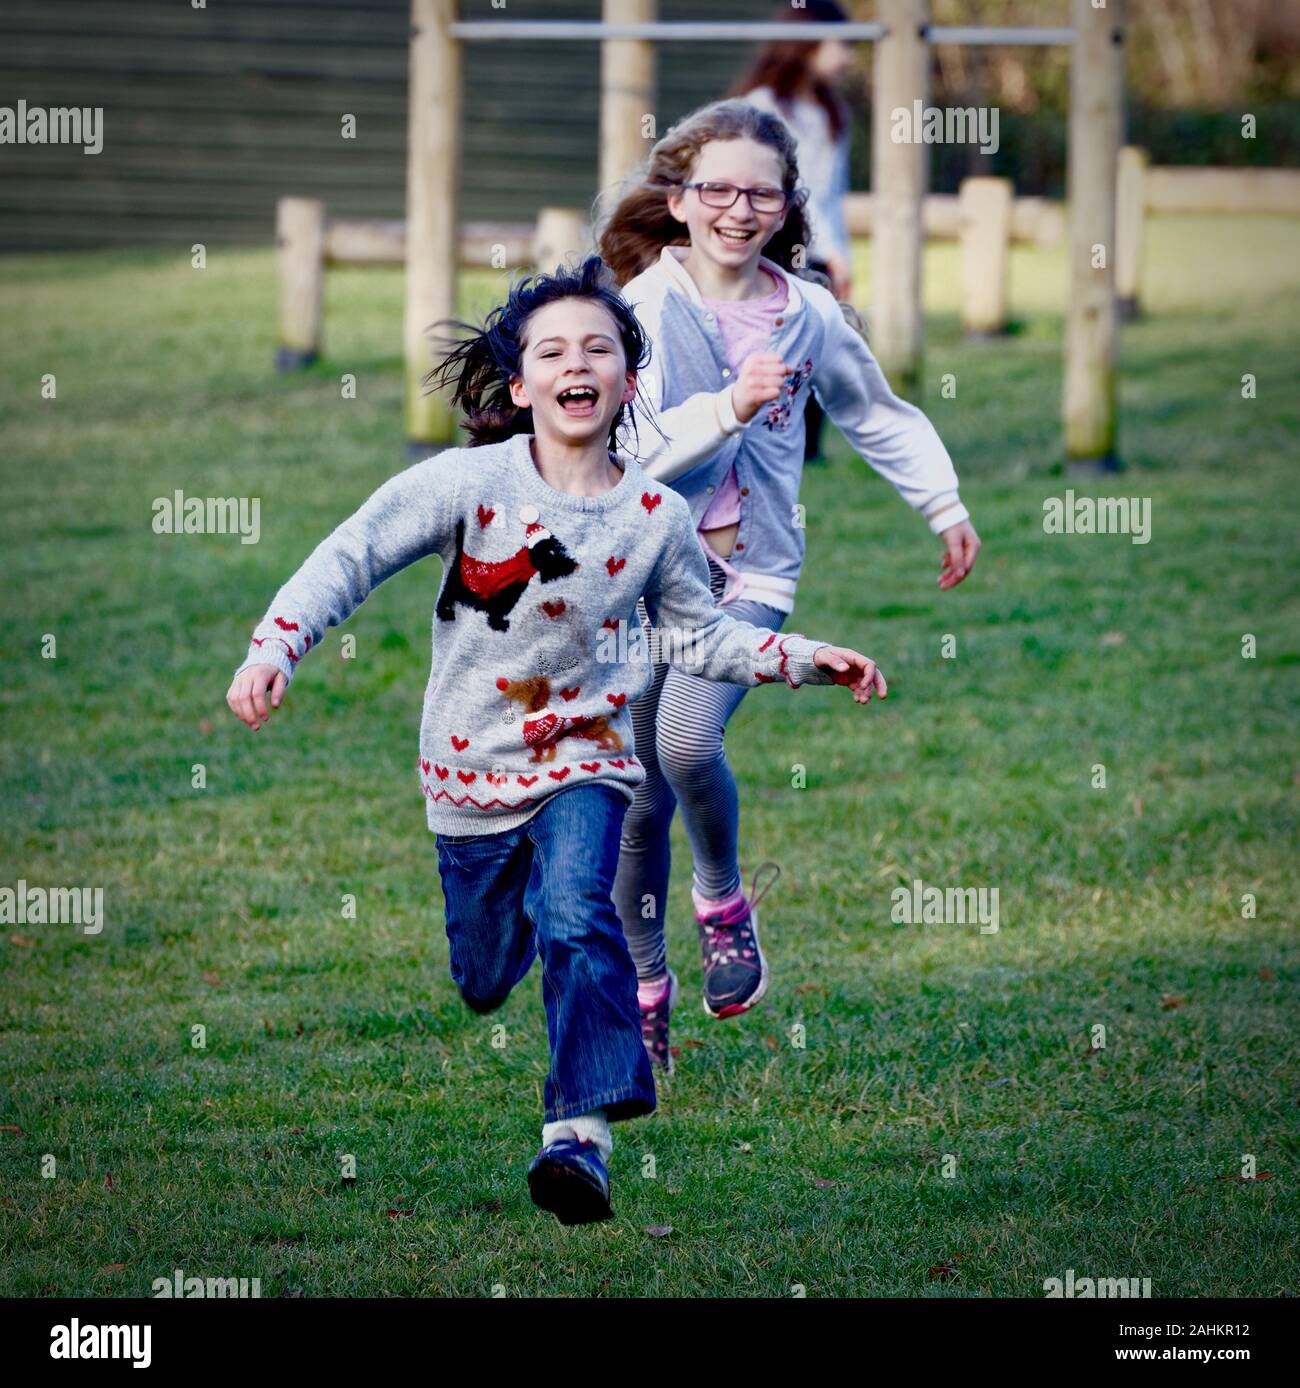 Children running in a park Stock Photo